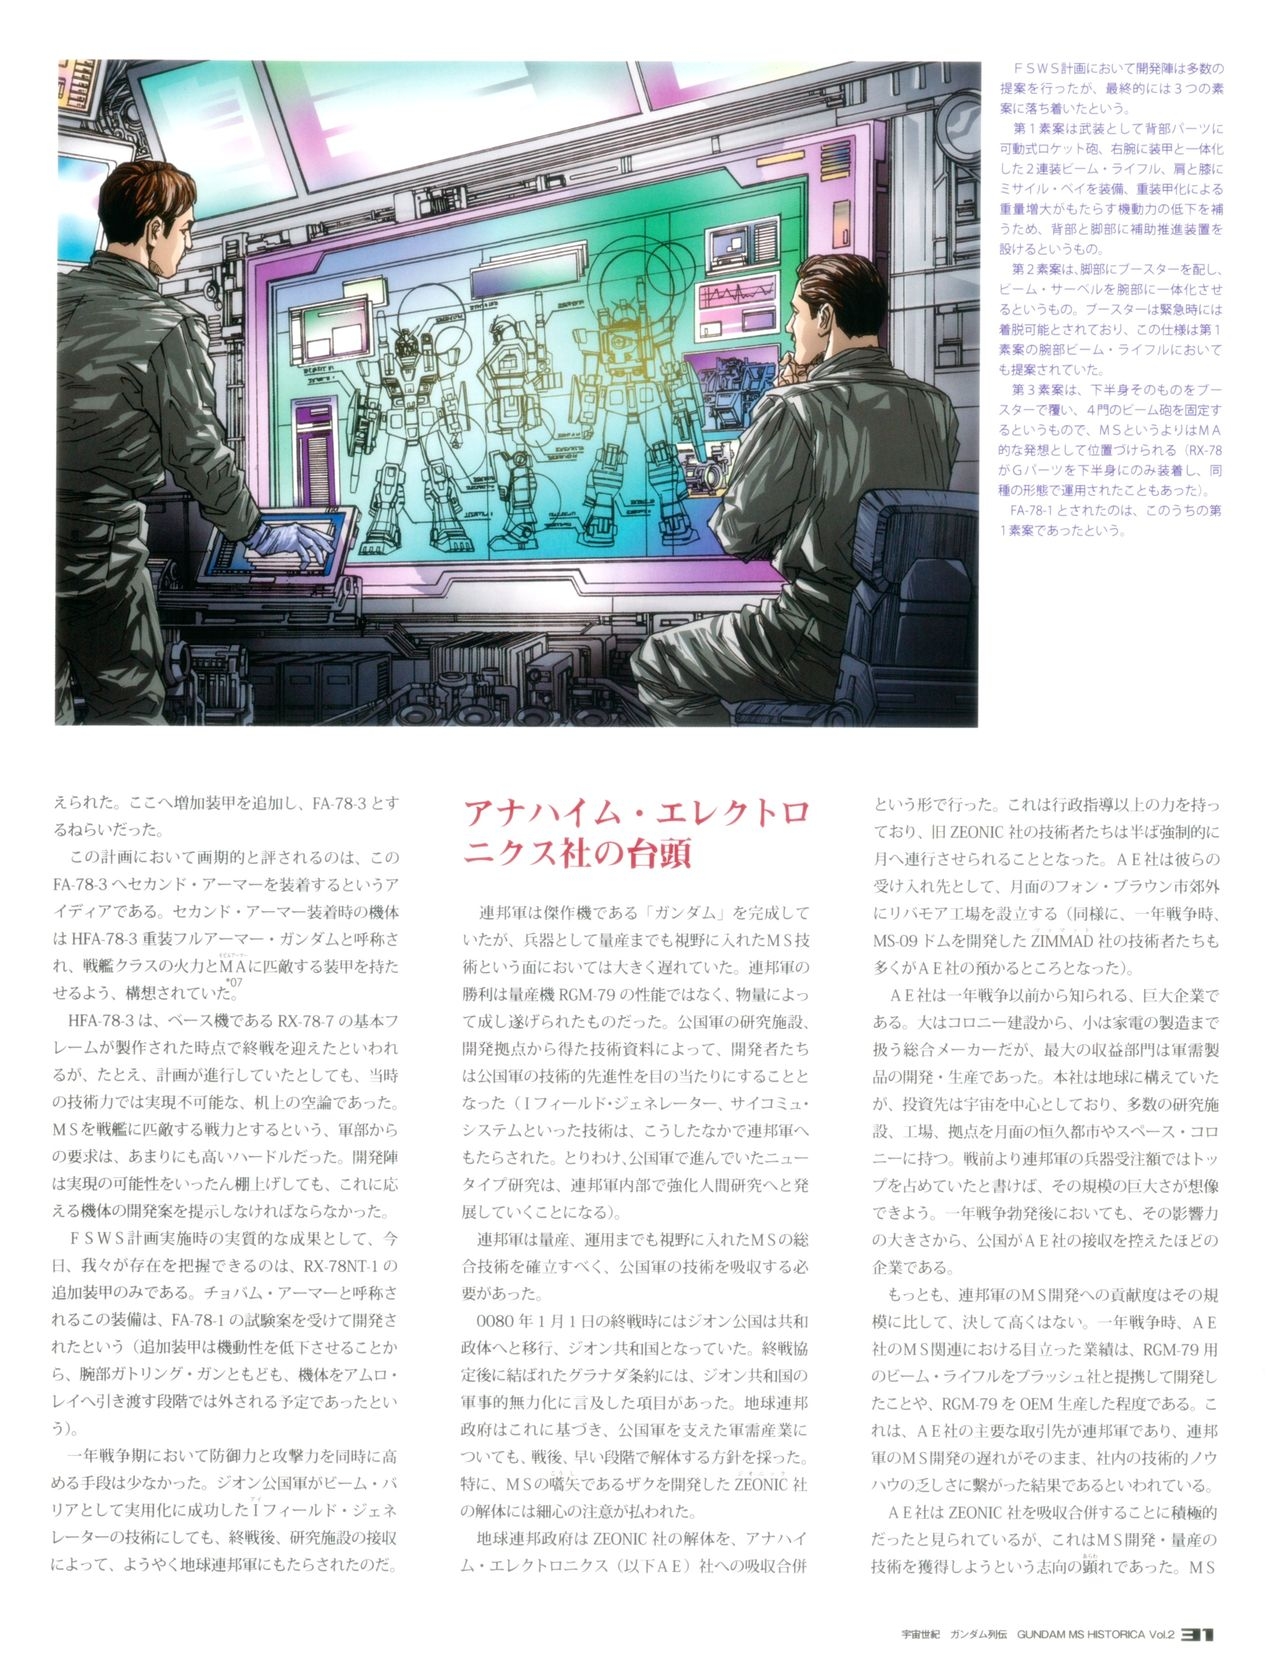 Gundam - MS Historica Vol.2 30